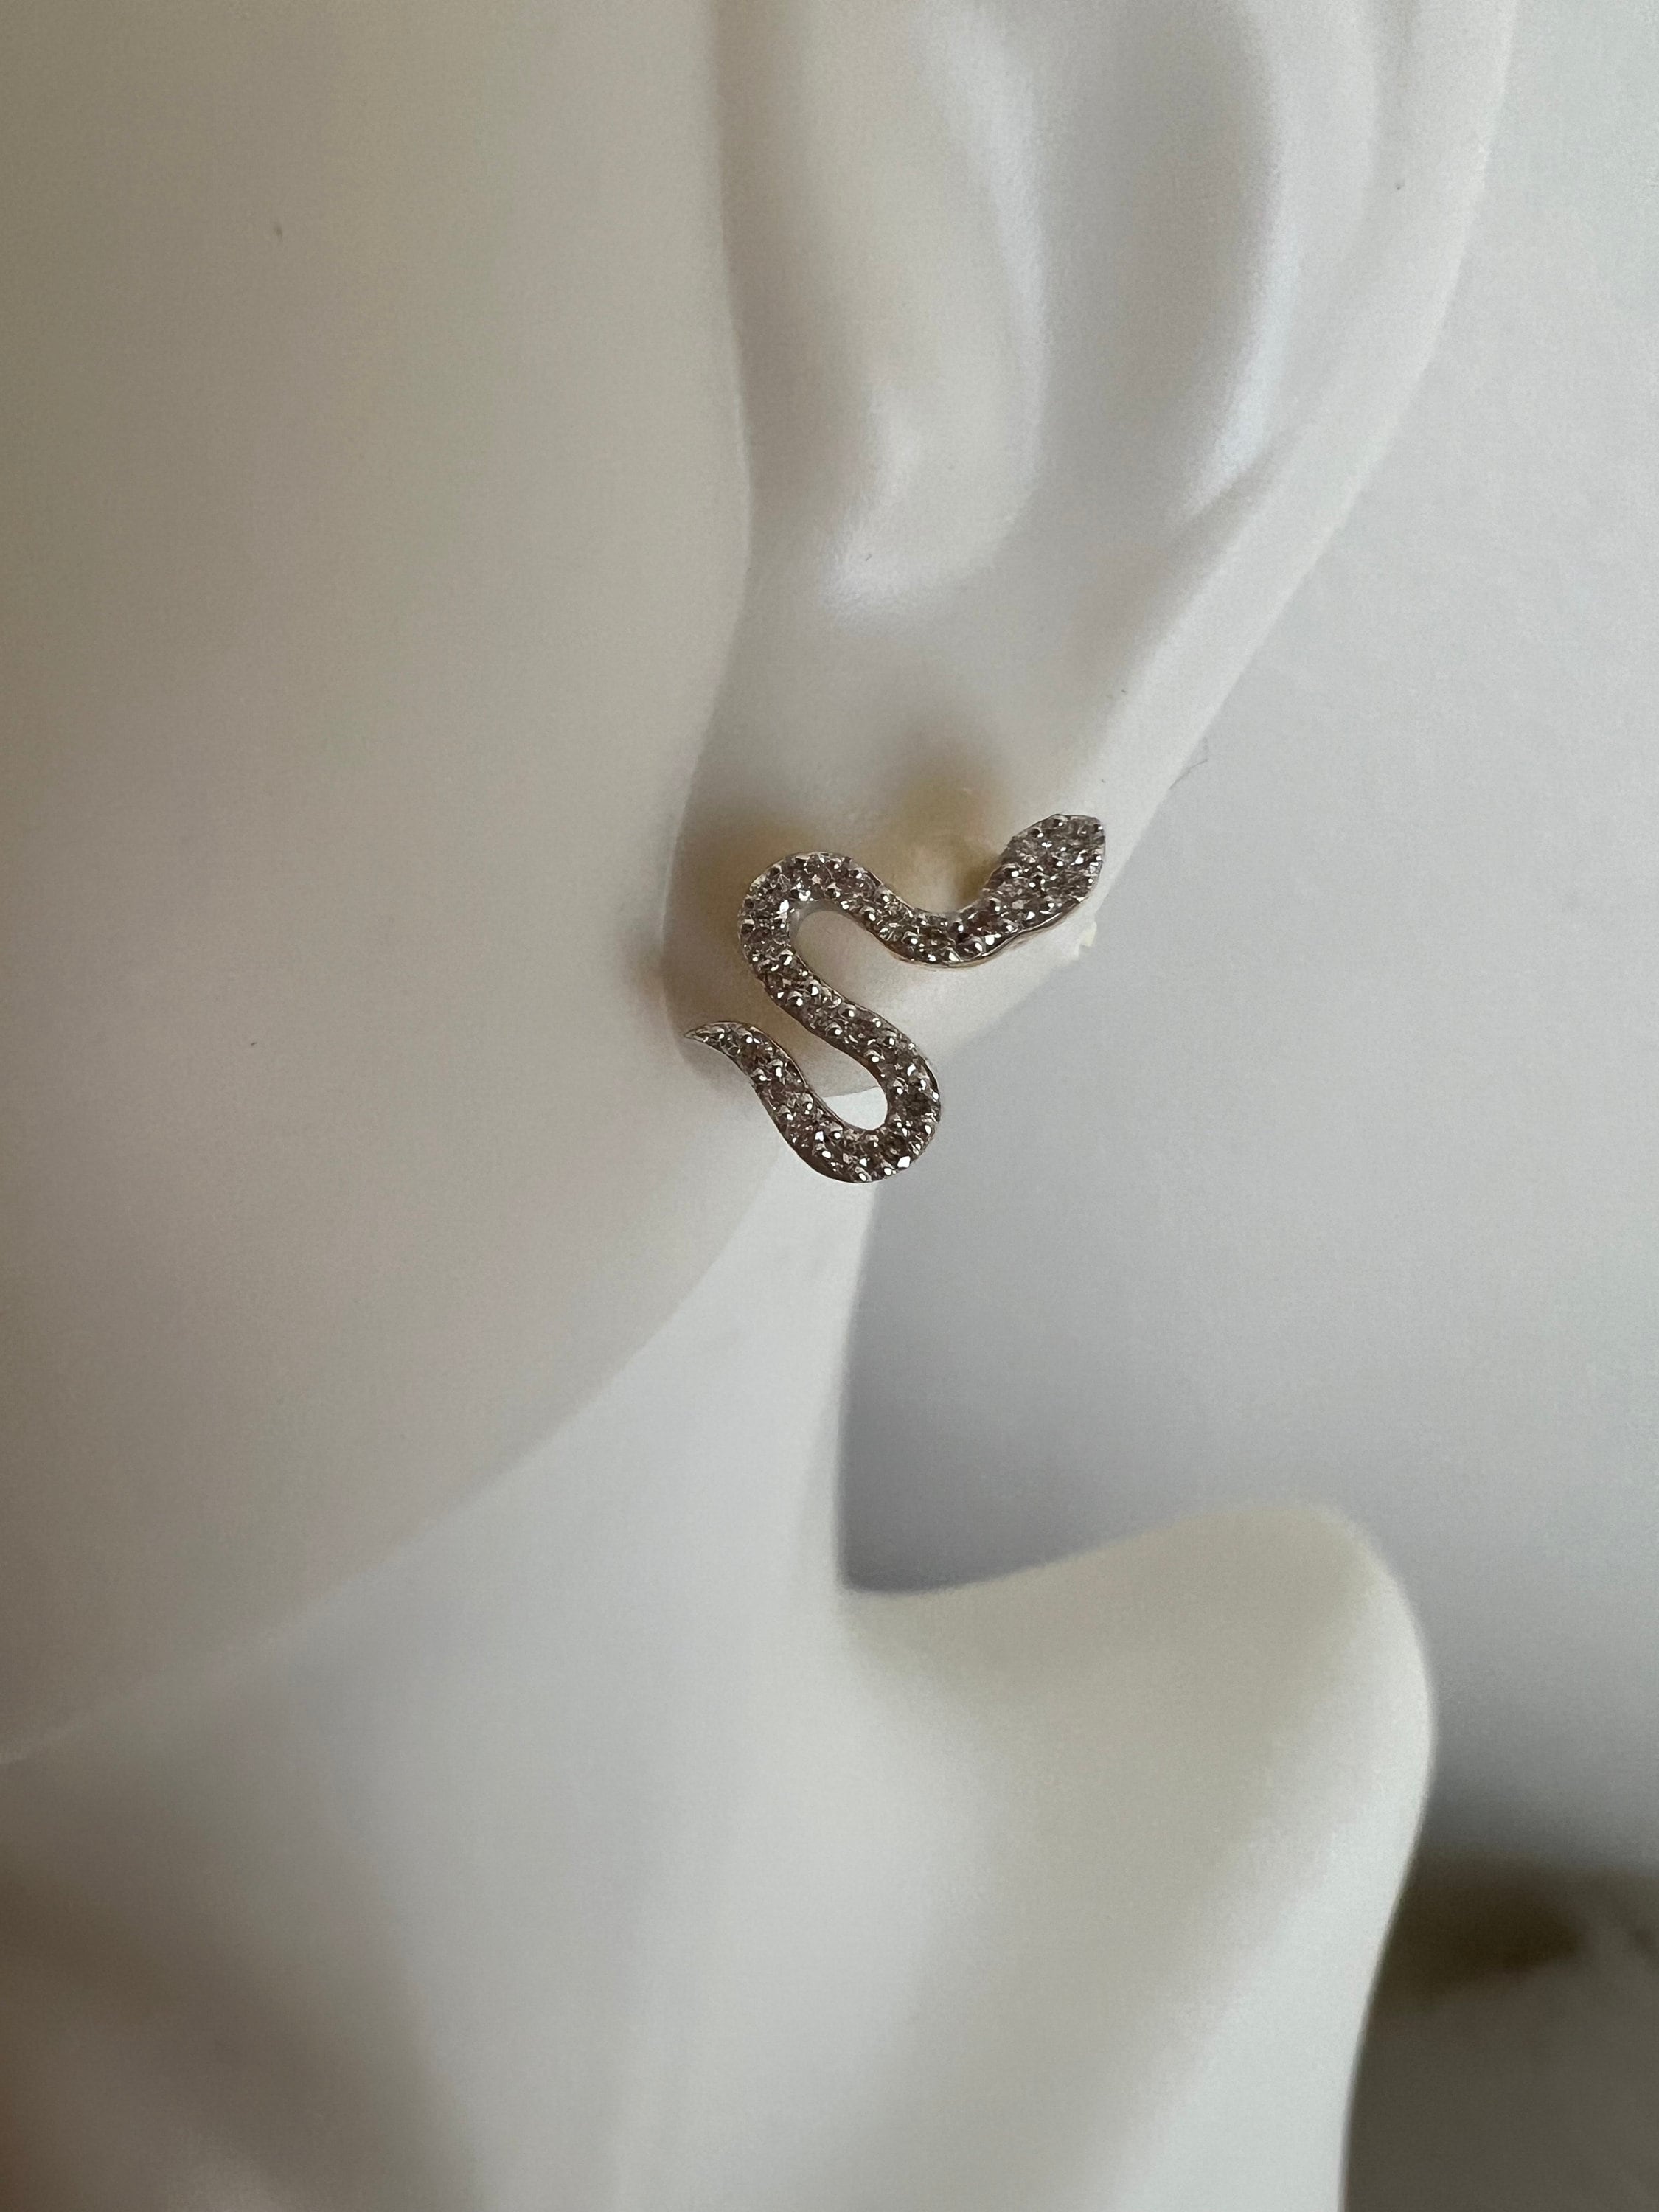 Sweet 14K Solid Yellow Gold Diamond Snake Earrings - 0.24ct